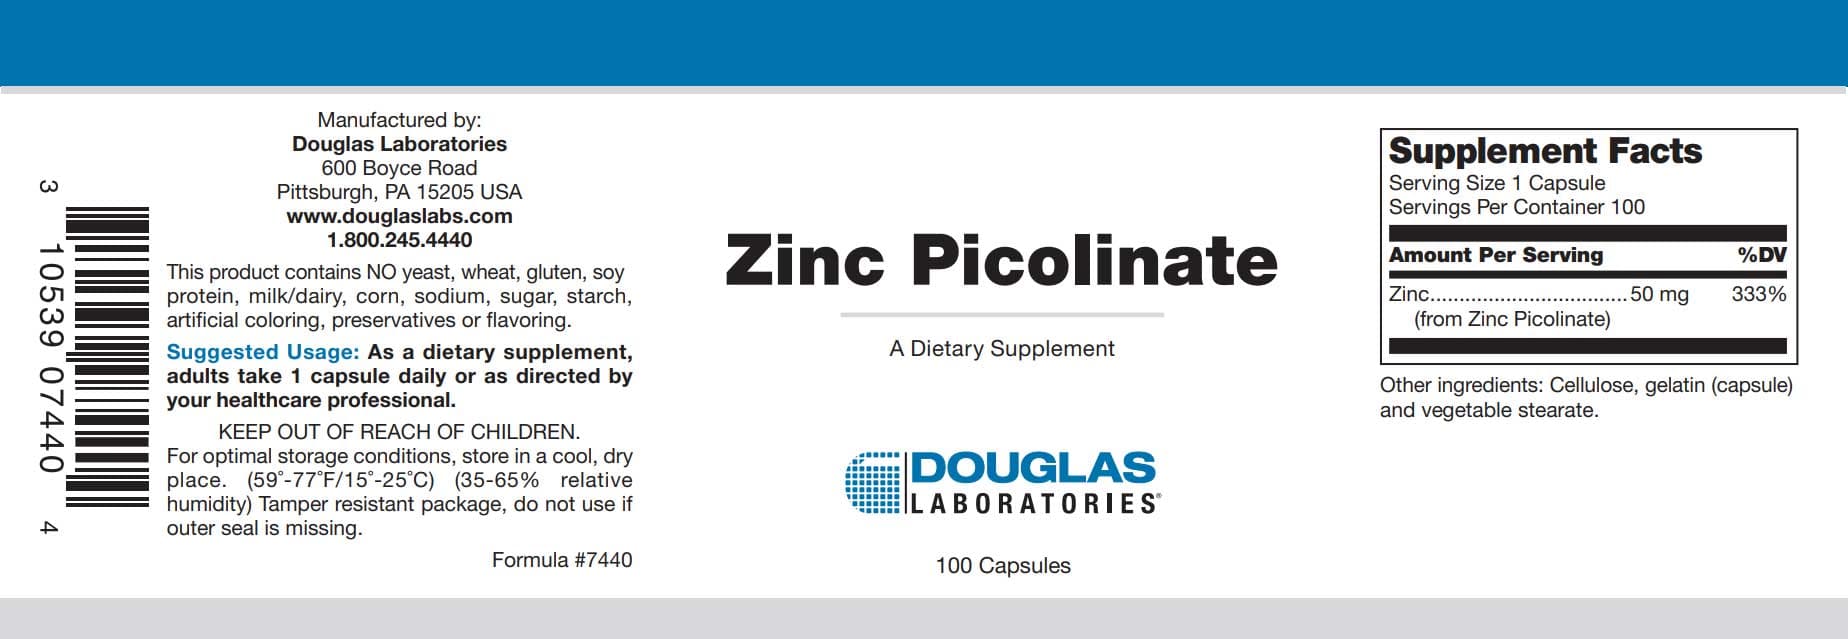 Douglas Laboratories Zinc Picolinate 50mg Label